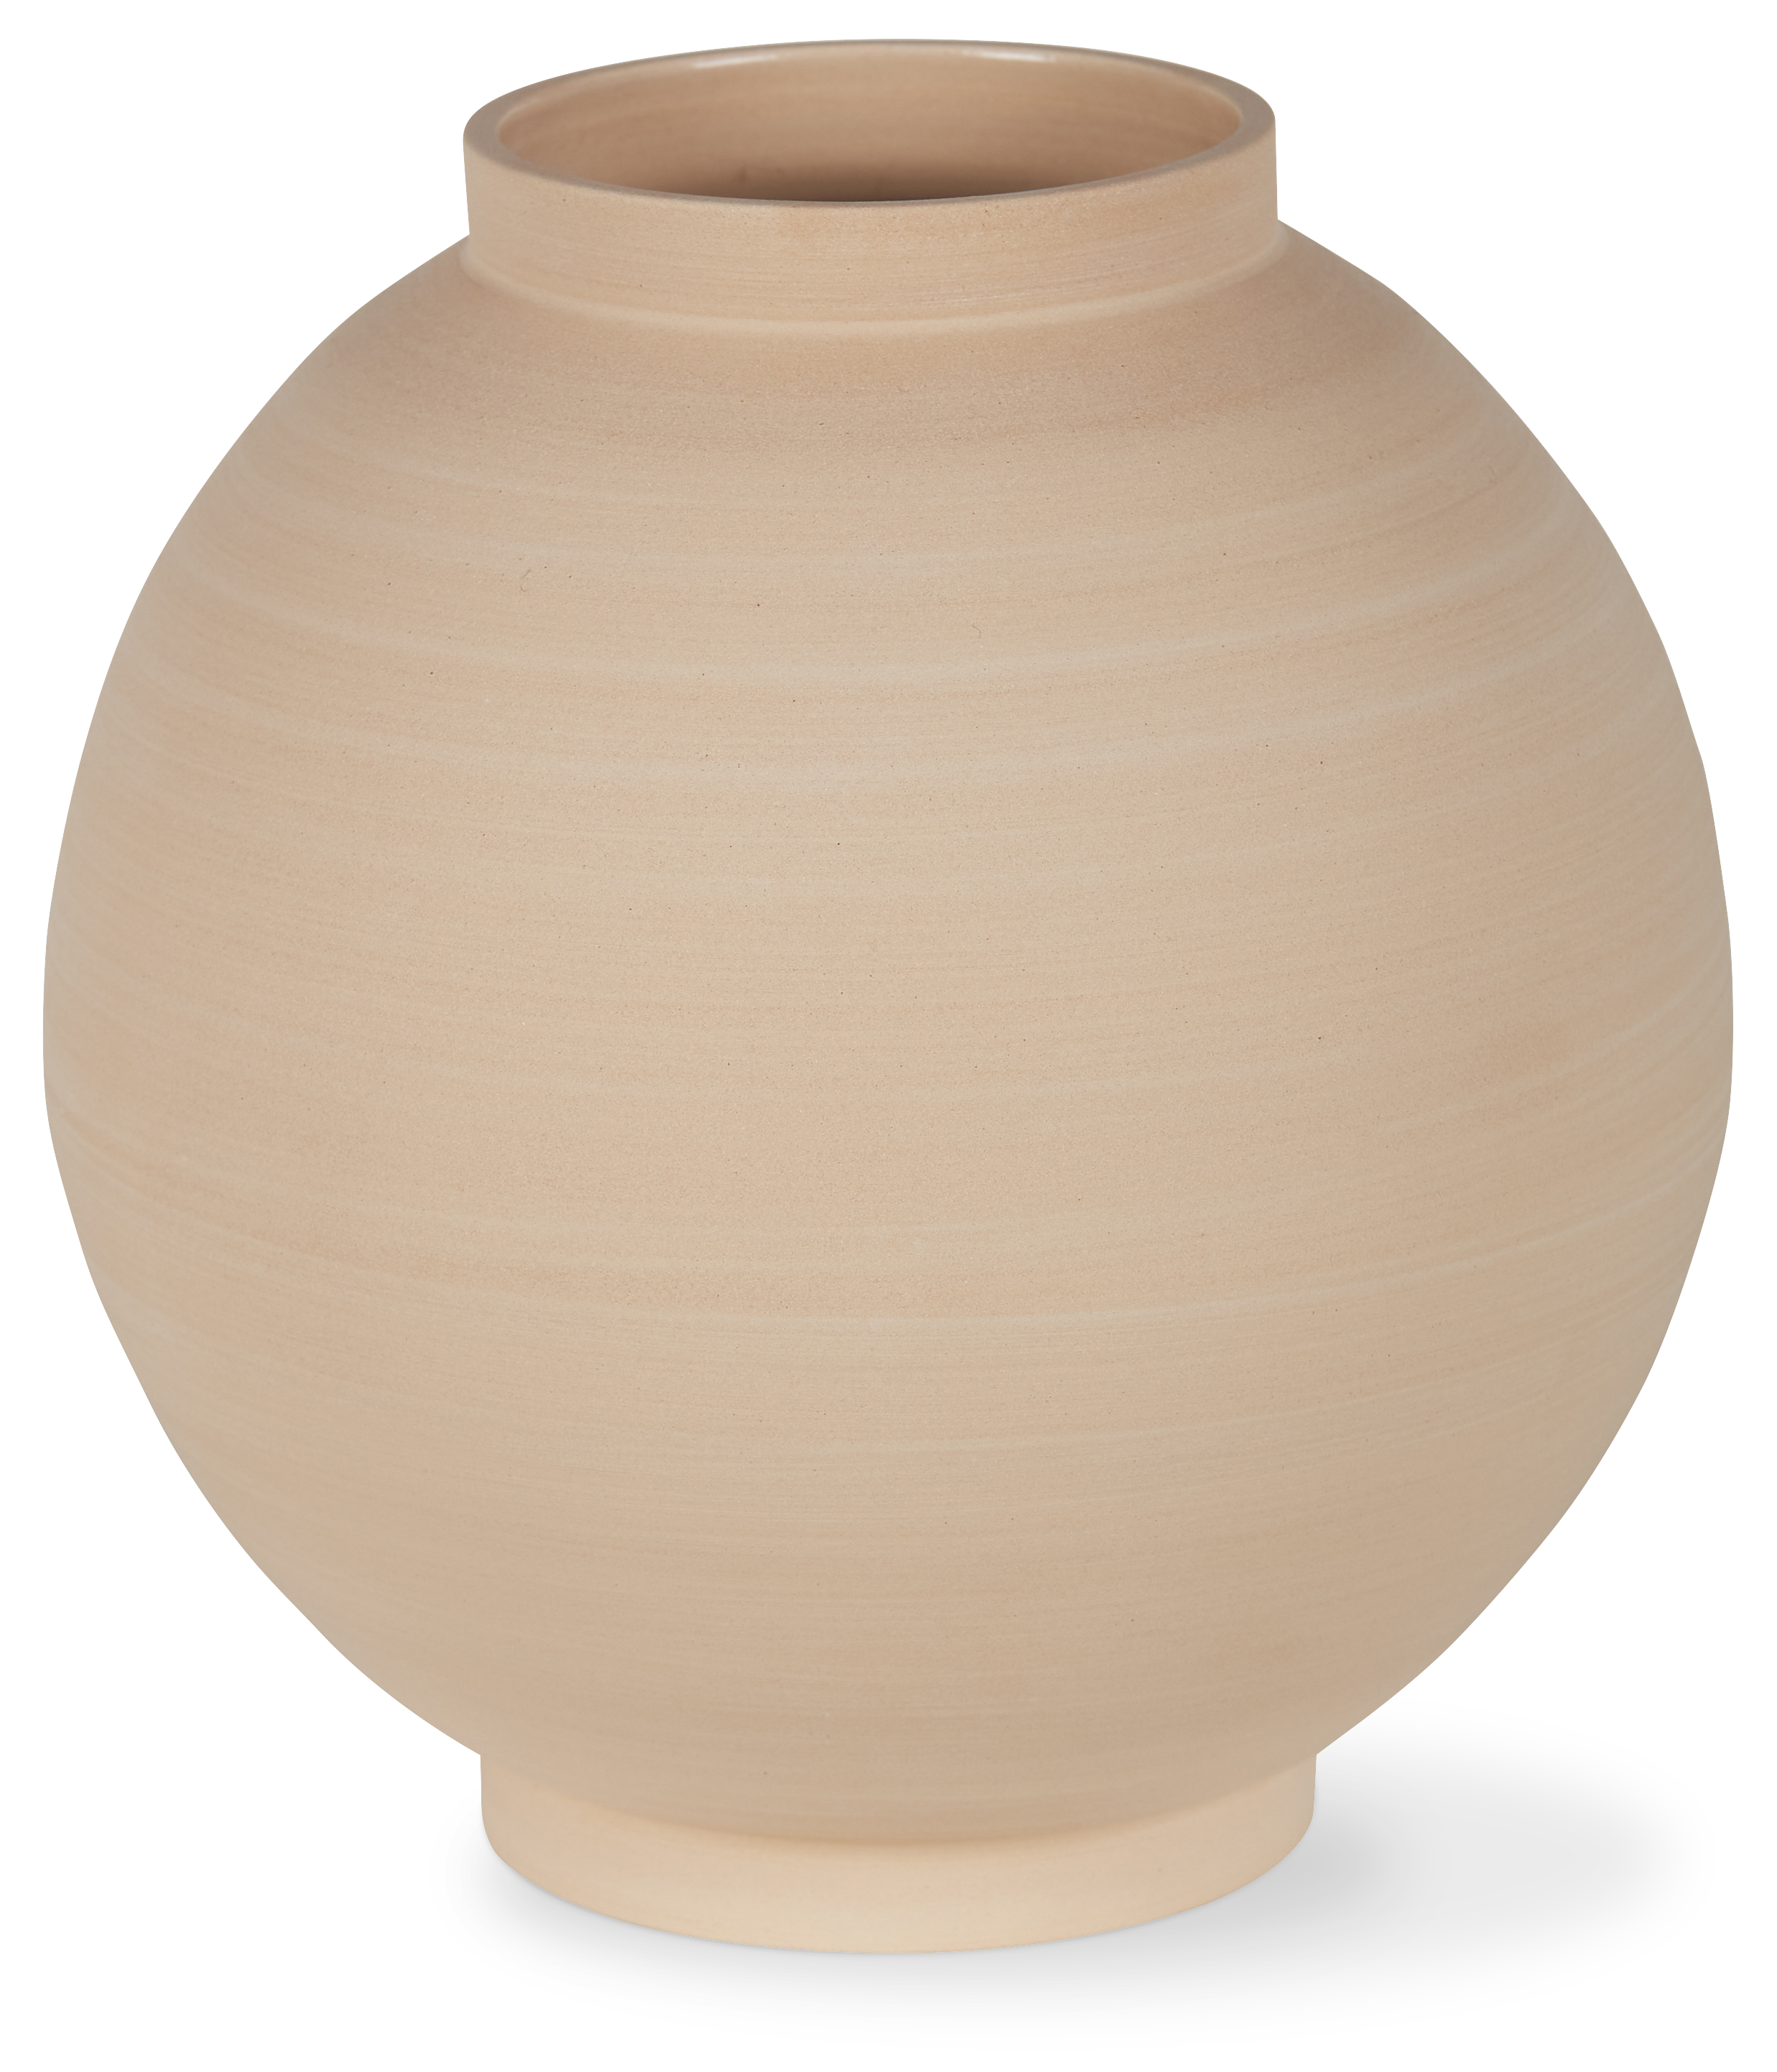 Clay vas